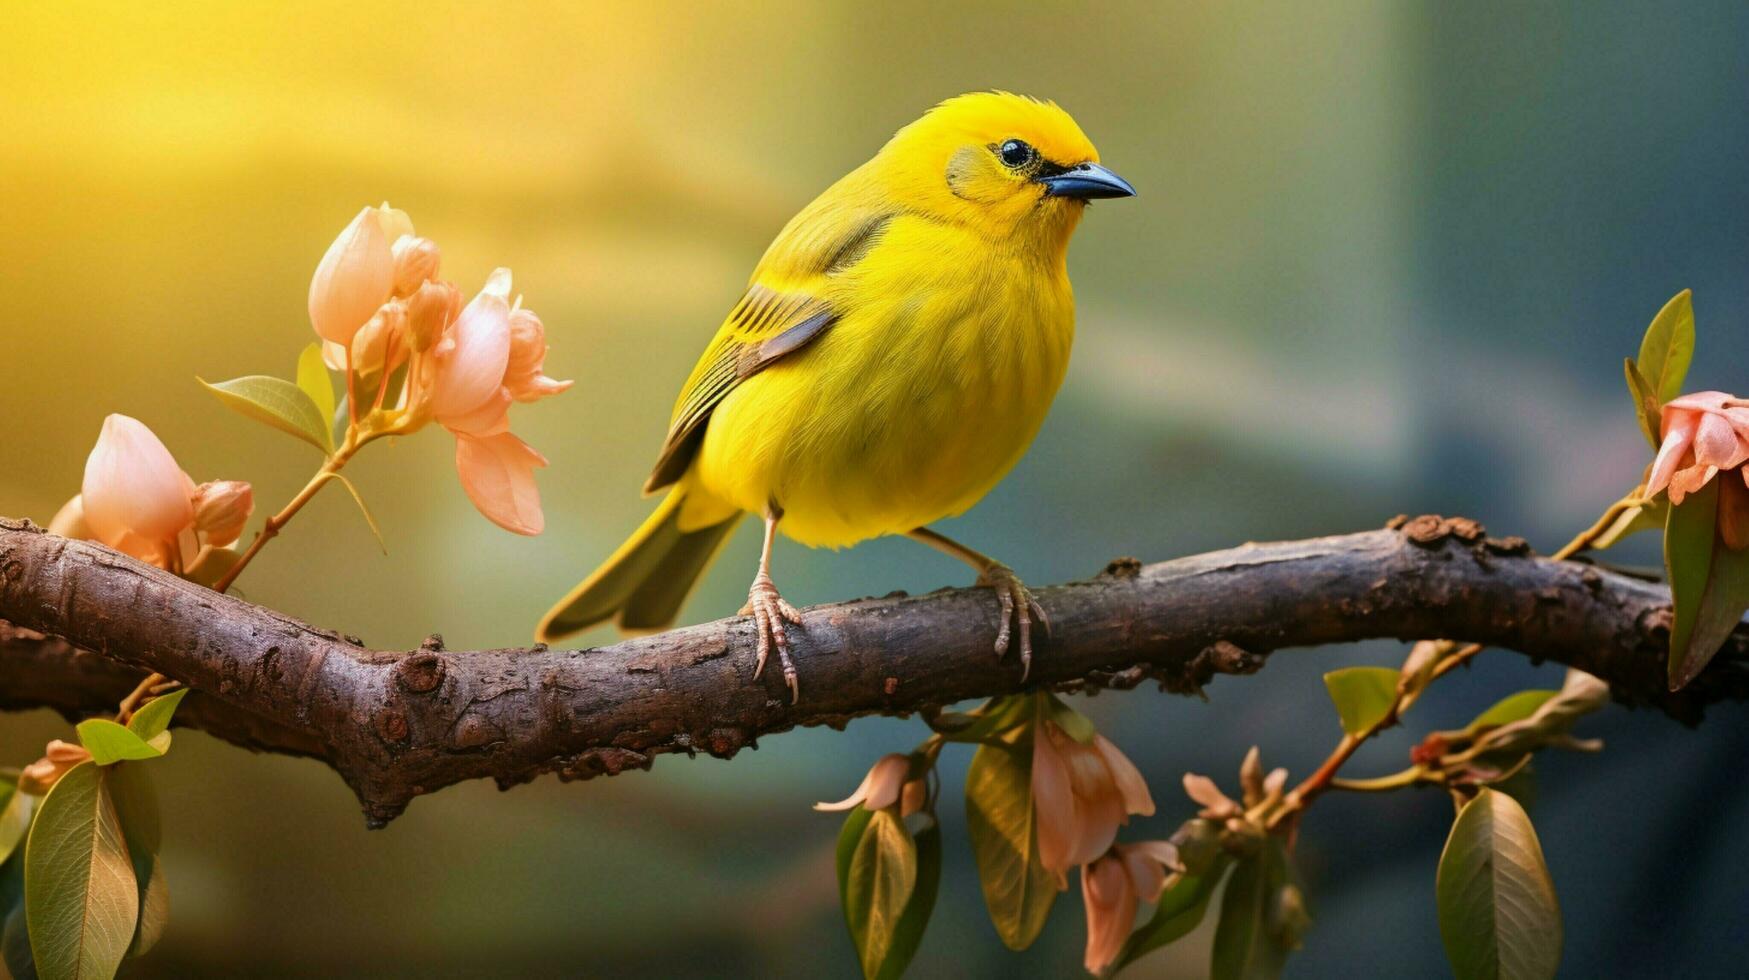 un linda amarillo pájaro encaramado en un rama en naturaleza foto